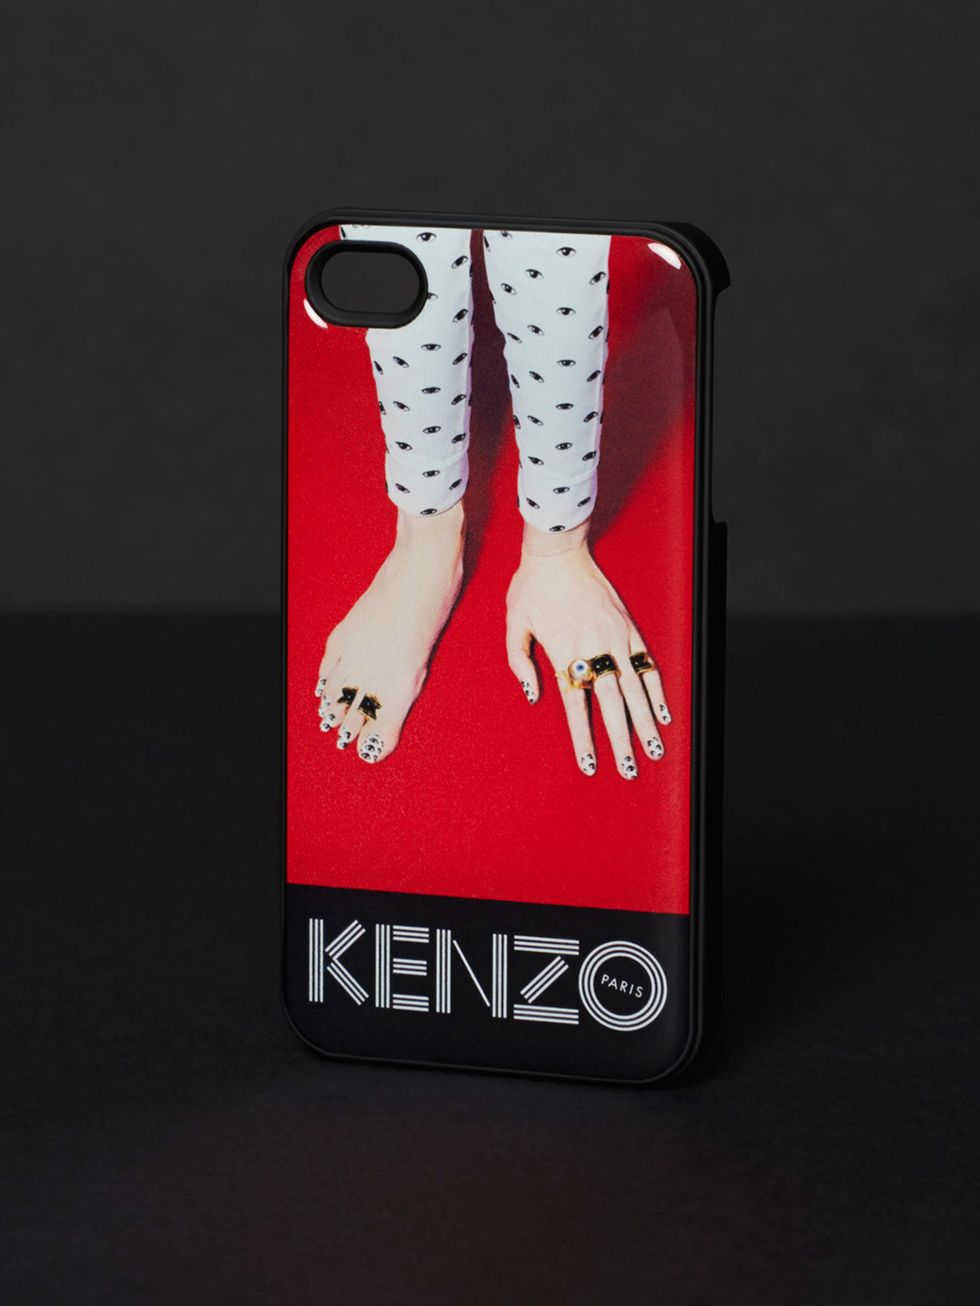 <p>Kenzo X Toiletpaper iPhone cover</p>